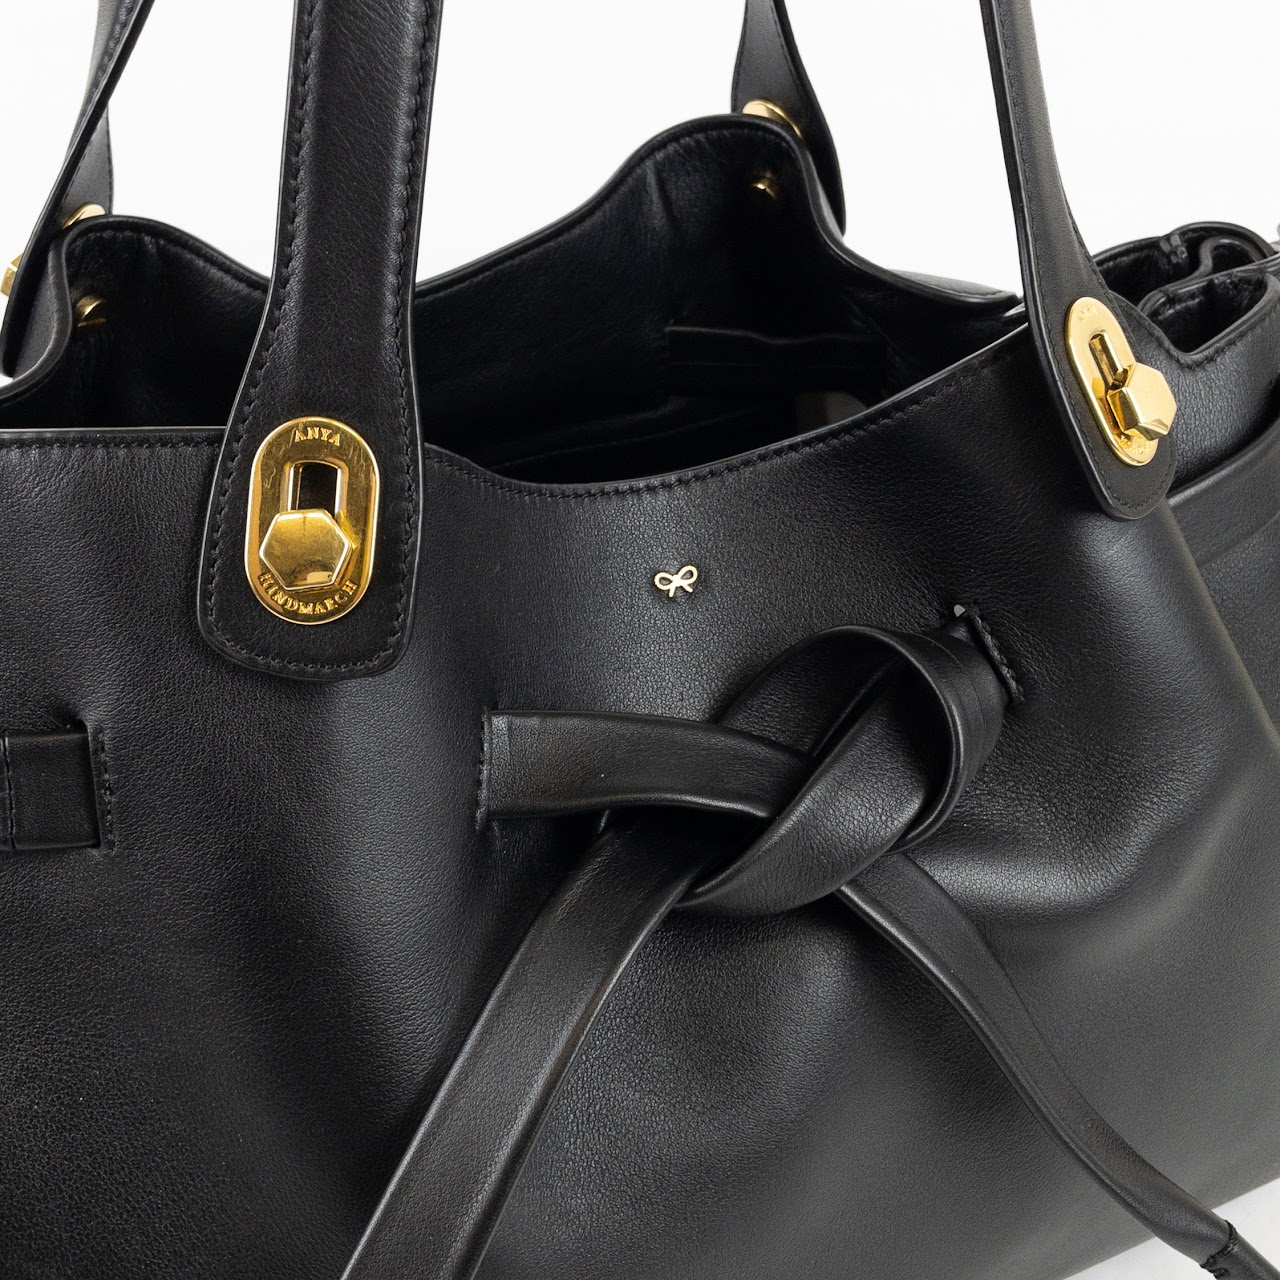 Anya Hindmarch Black & Brown Leather Handbag